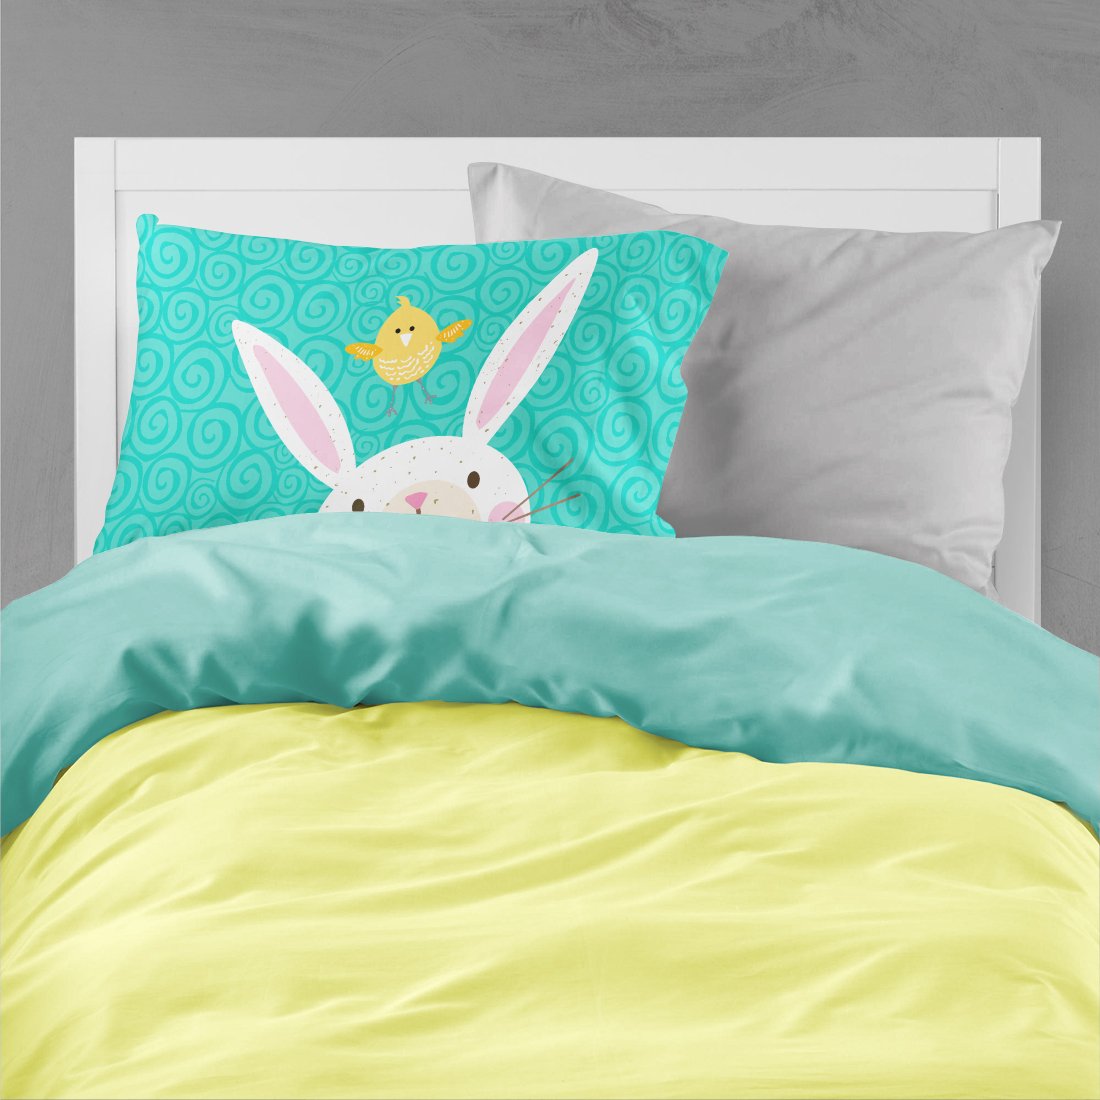 Happy Easter Rabbit Fabric Standard Pillowcase VHA3032PILLOWCASE by Caroline's Treasures